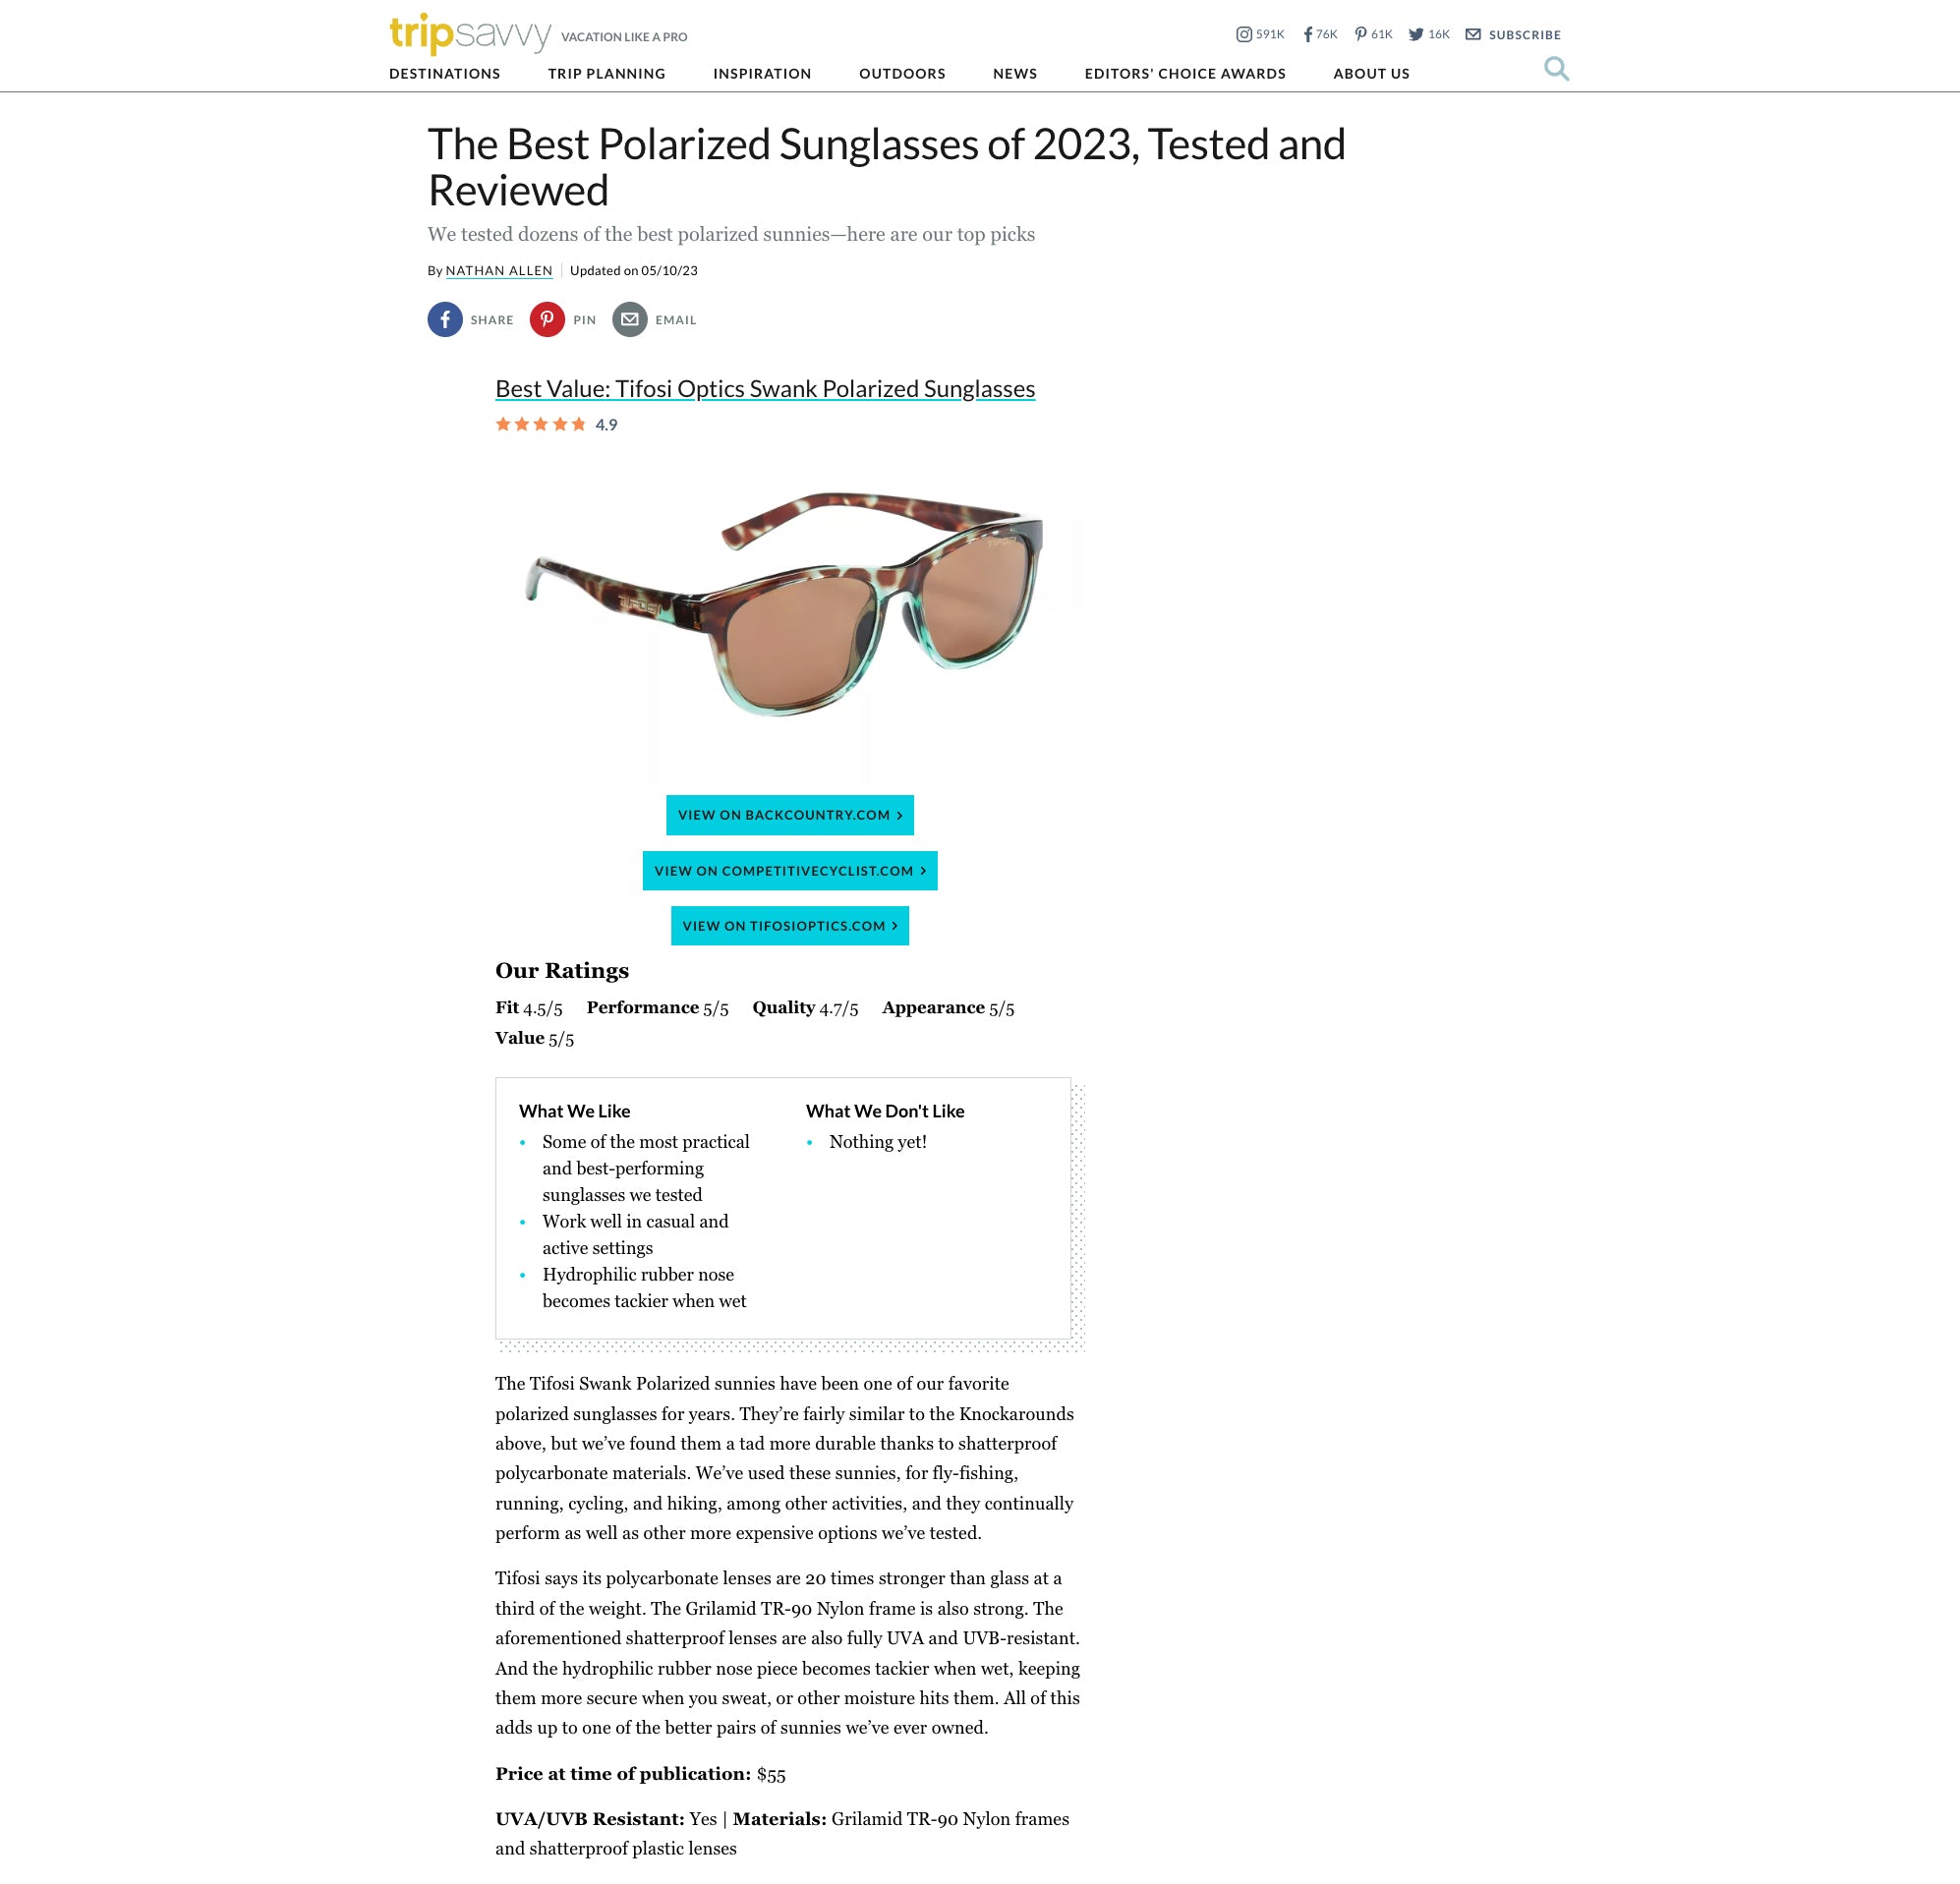 Best Polarized Sunglasses of 2023 - Tripsavvy May 2023